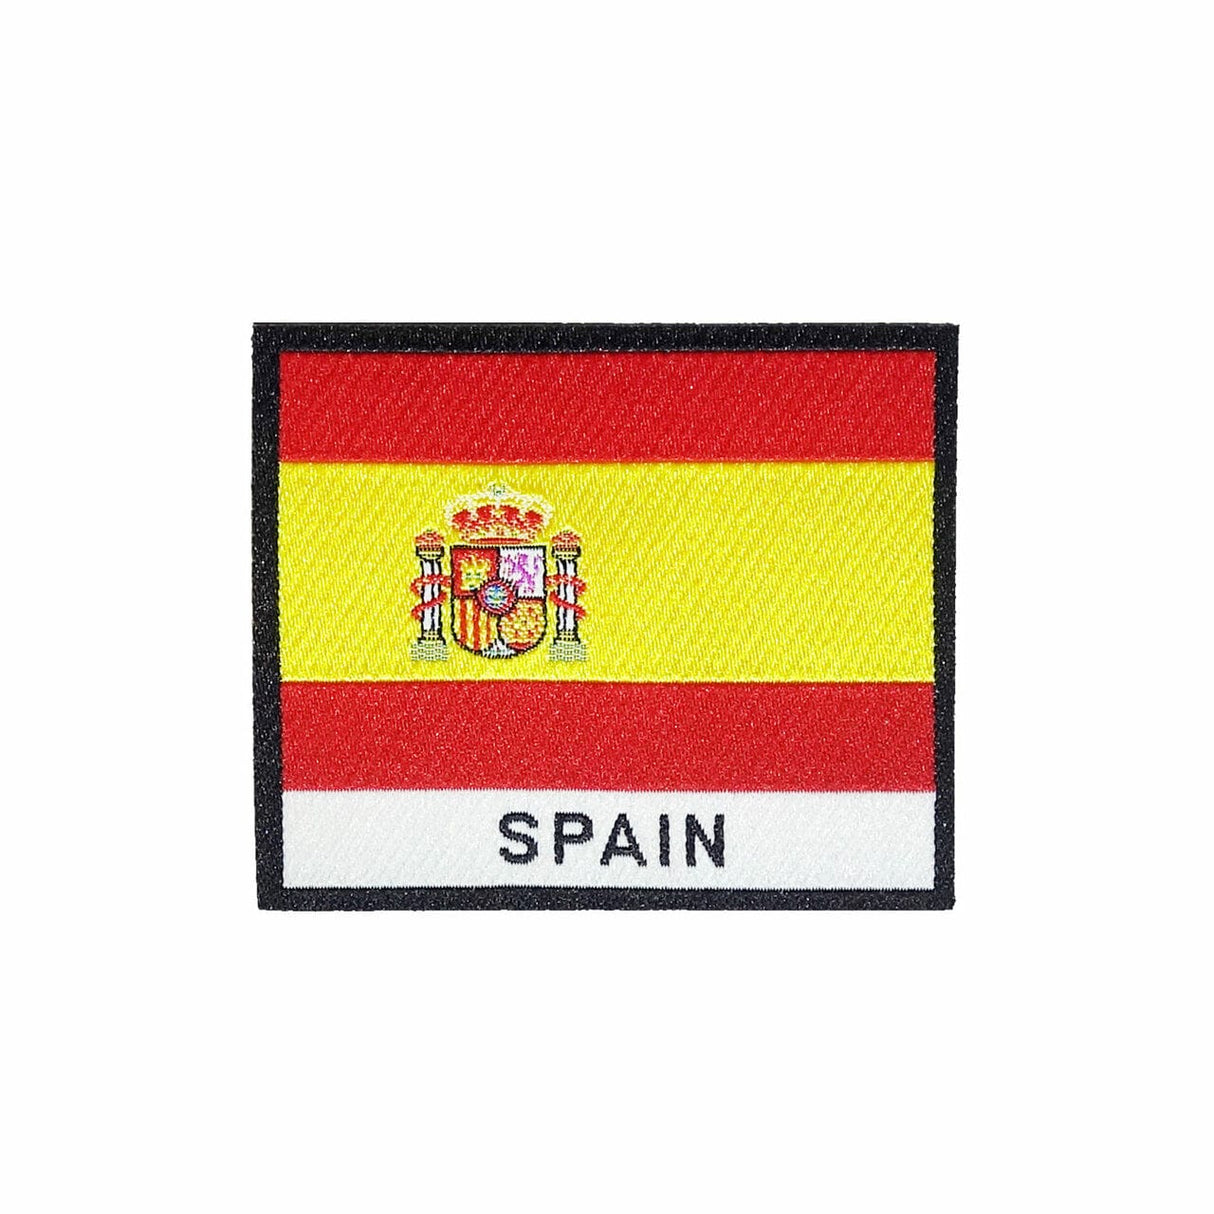 Spain Flag Black Frame Iron On Patch